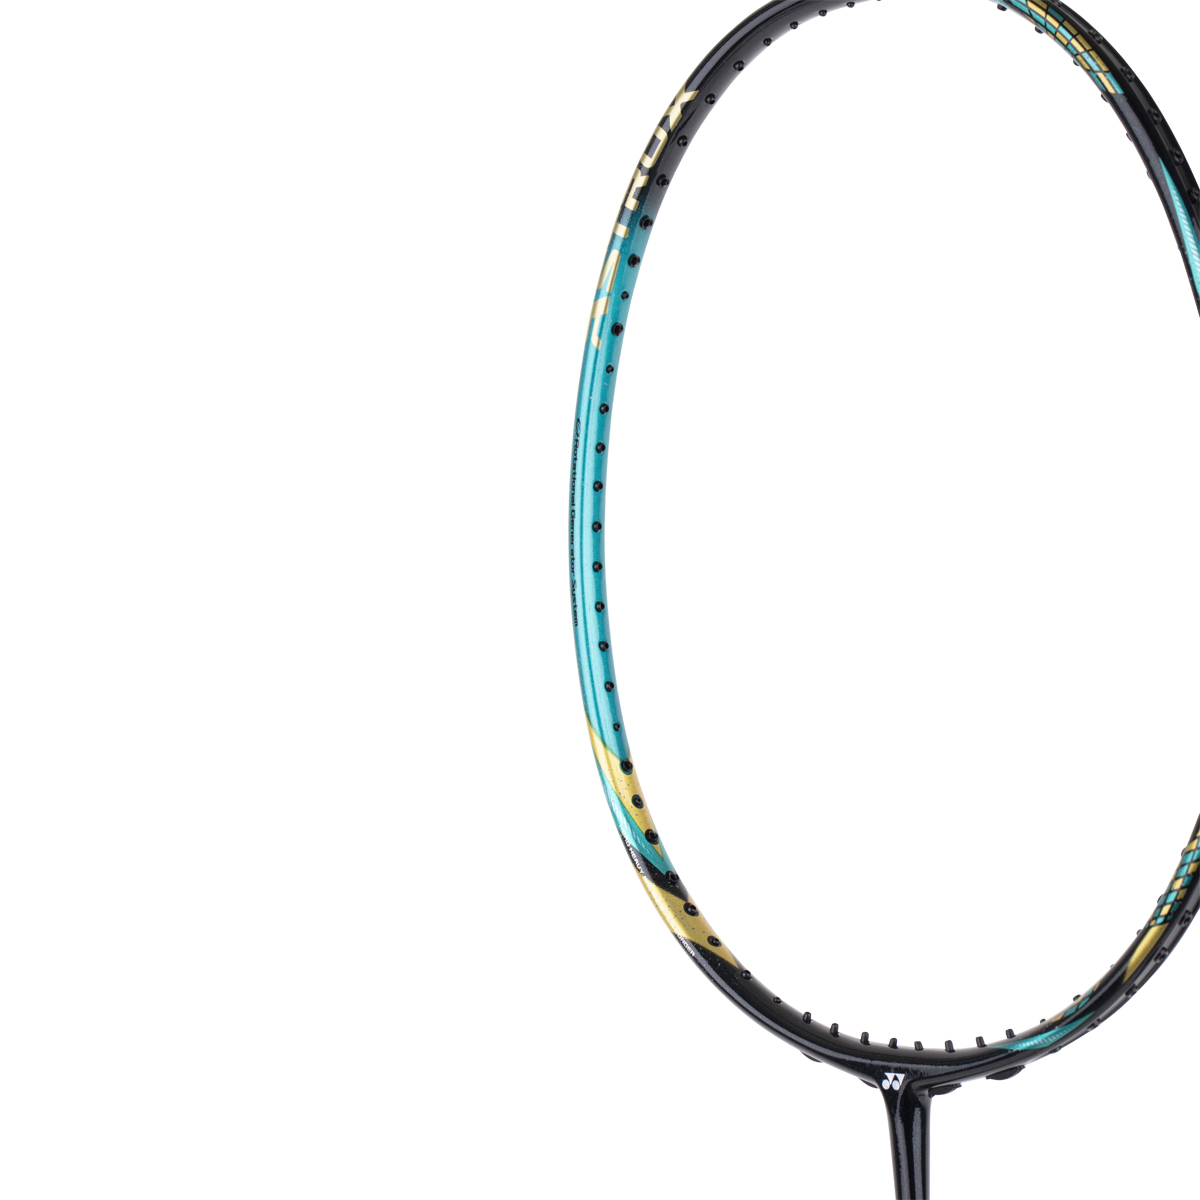 Badmintonschläger - YONEX - ASTROX 88S PRODetailbild2